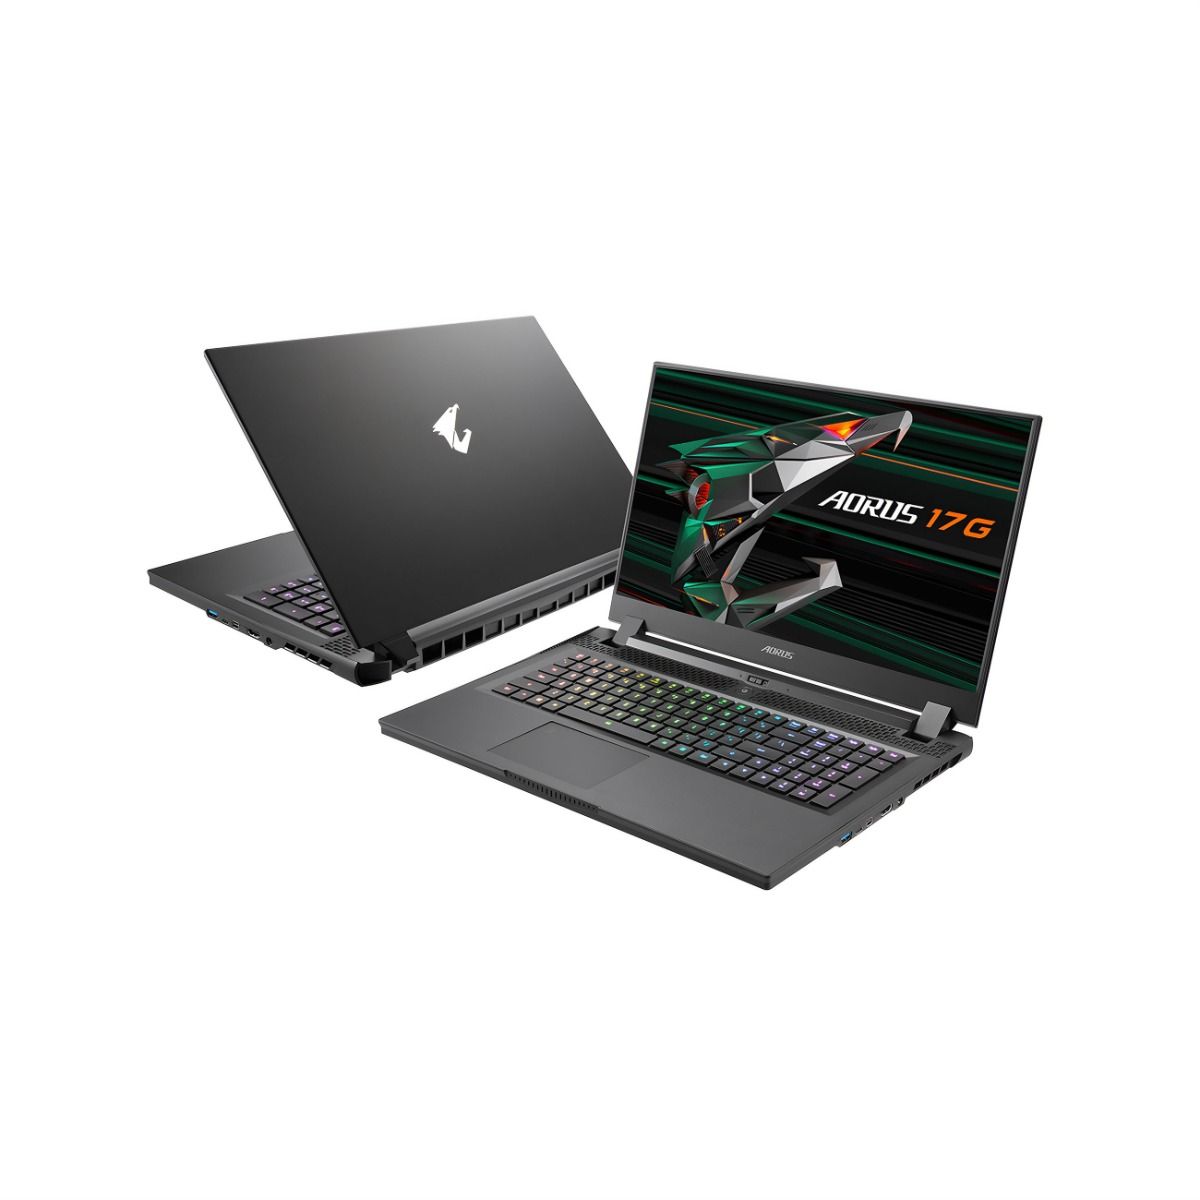 Gigabyte Aorus 17G Gaming Laptop i7 11th Gen 16GB RAM 512GB SSD GeForce RTX 3060